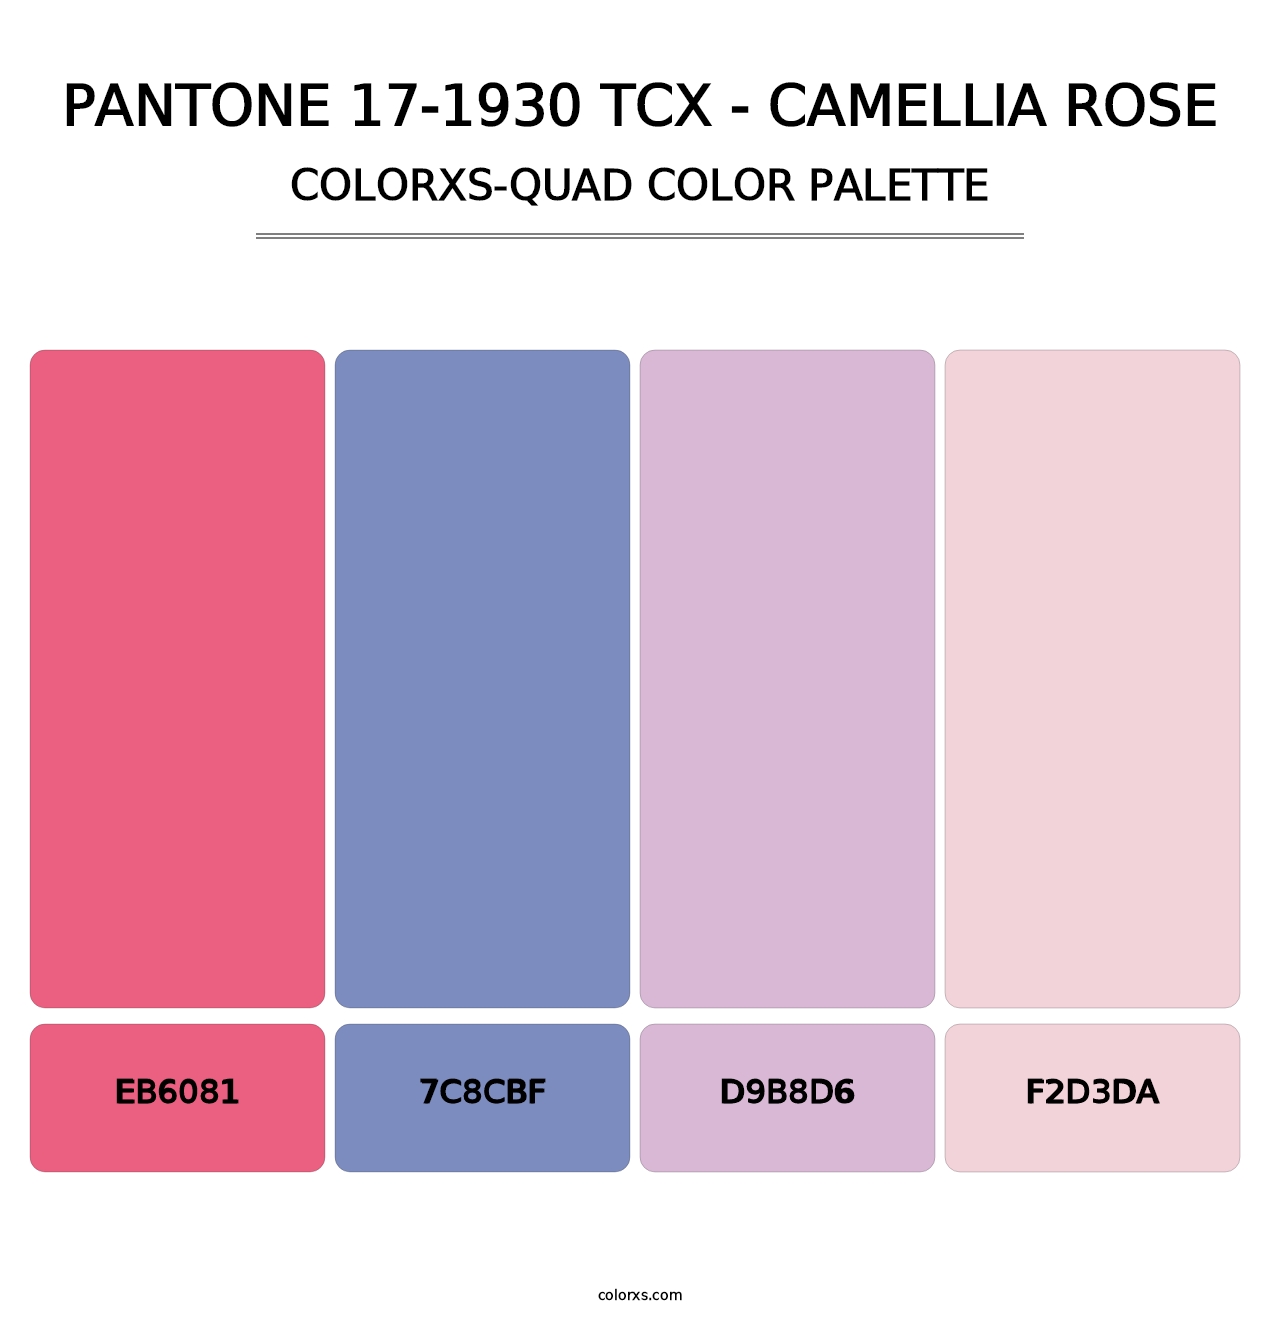 PANTONE 17-1930 TCX - Camellia Rose - Colorxs Quad Palette